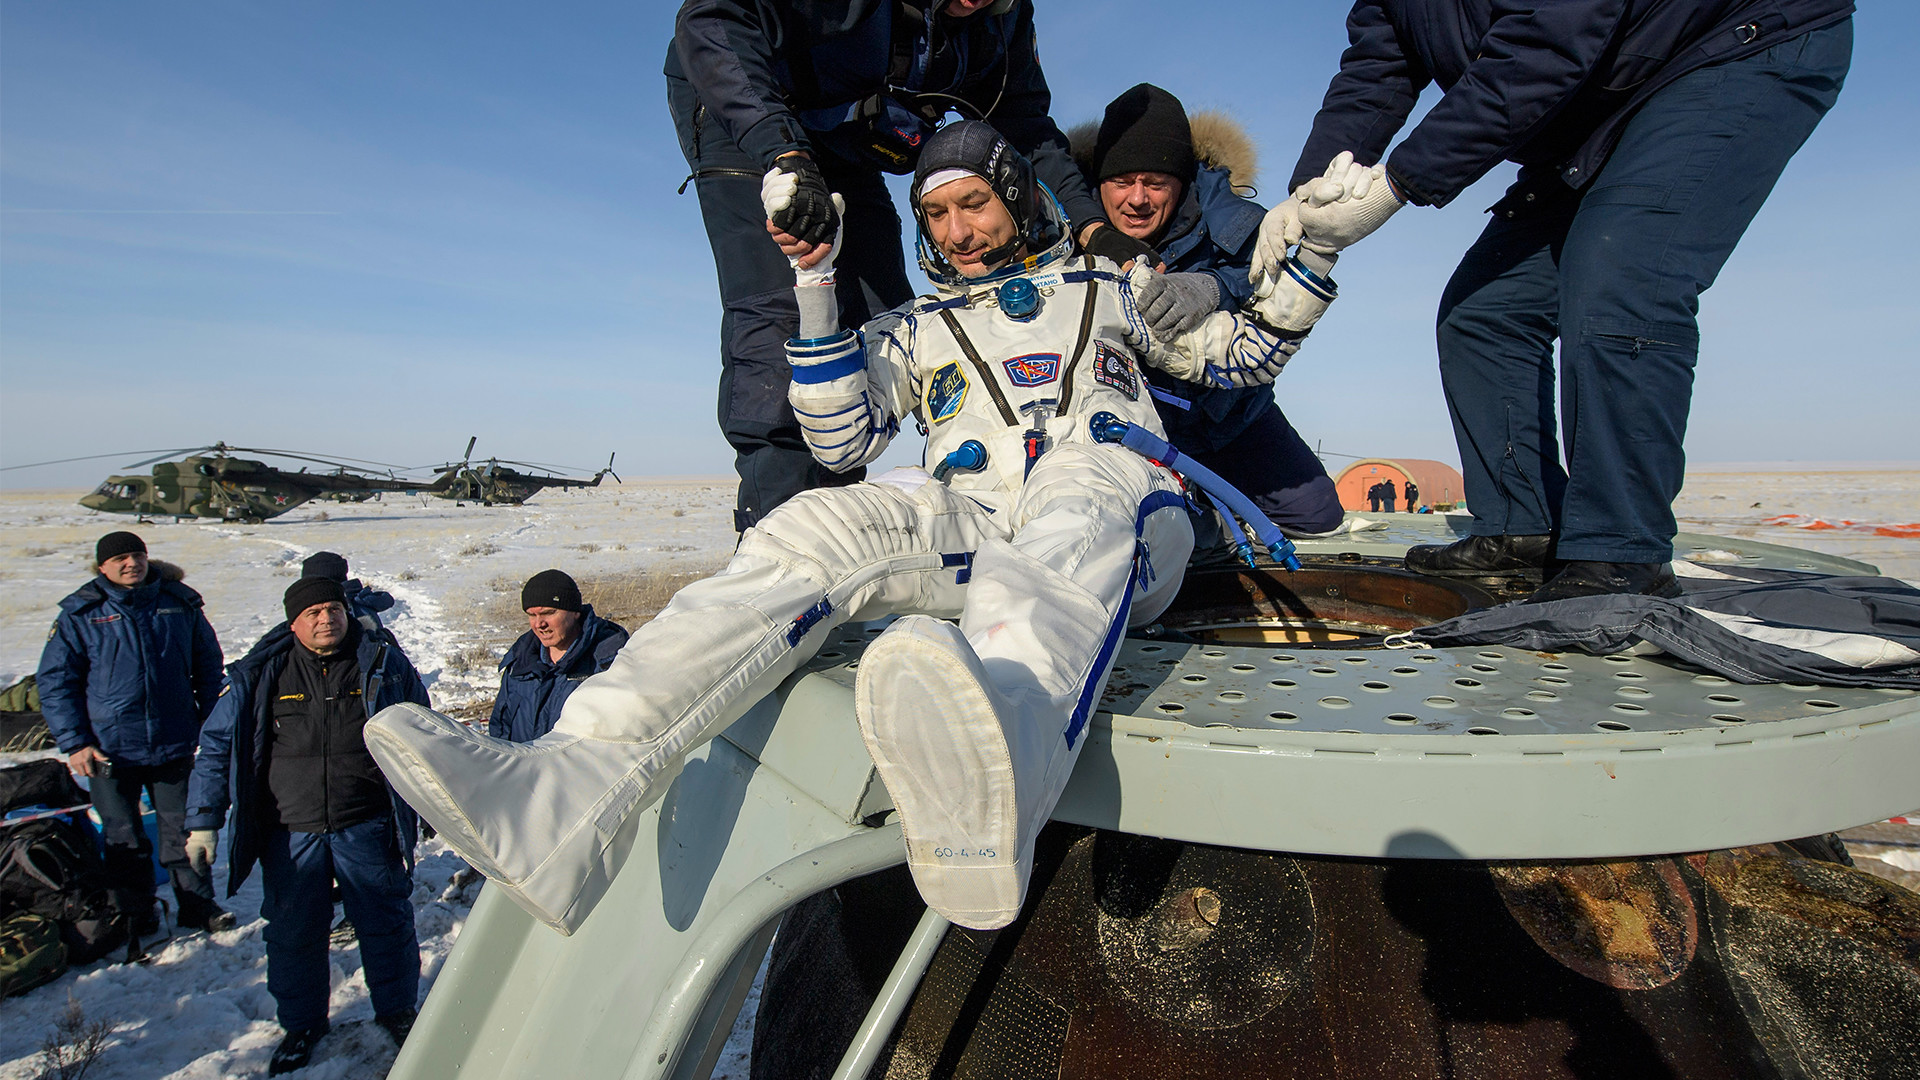 Астронаут Лука Пармитано уз помоћ спасилаца излази из капсуле брода „Сојуз МС-13“ само неколико минута након што су он, астронаут агенције НАСА Кристина Кох и космонаут Роскосмоса Александар Скворцов спустили капсулу близу града Жезказган у Казахстану, 6. фебруар 2020.